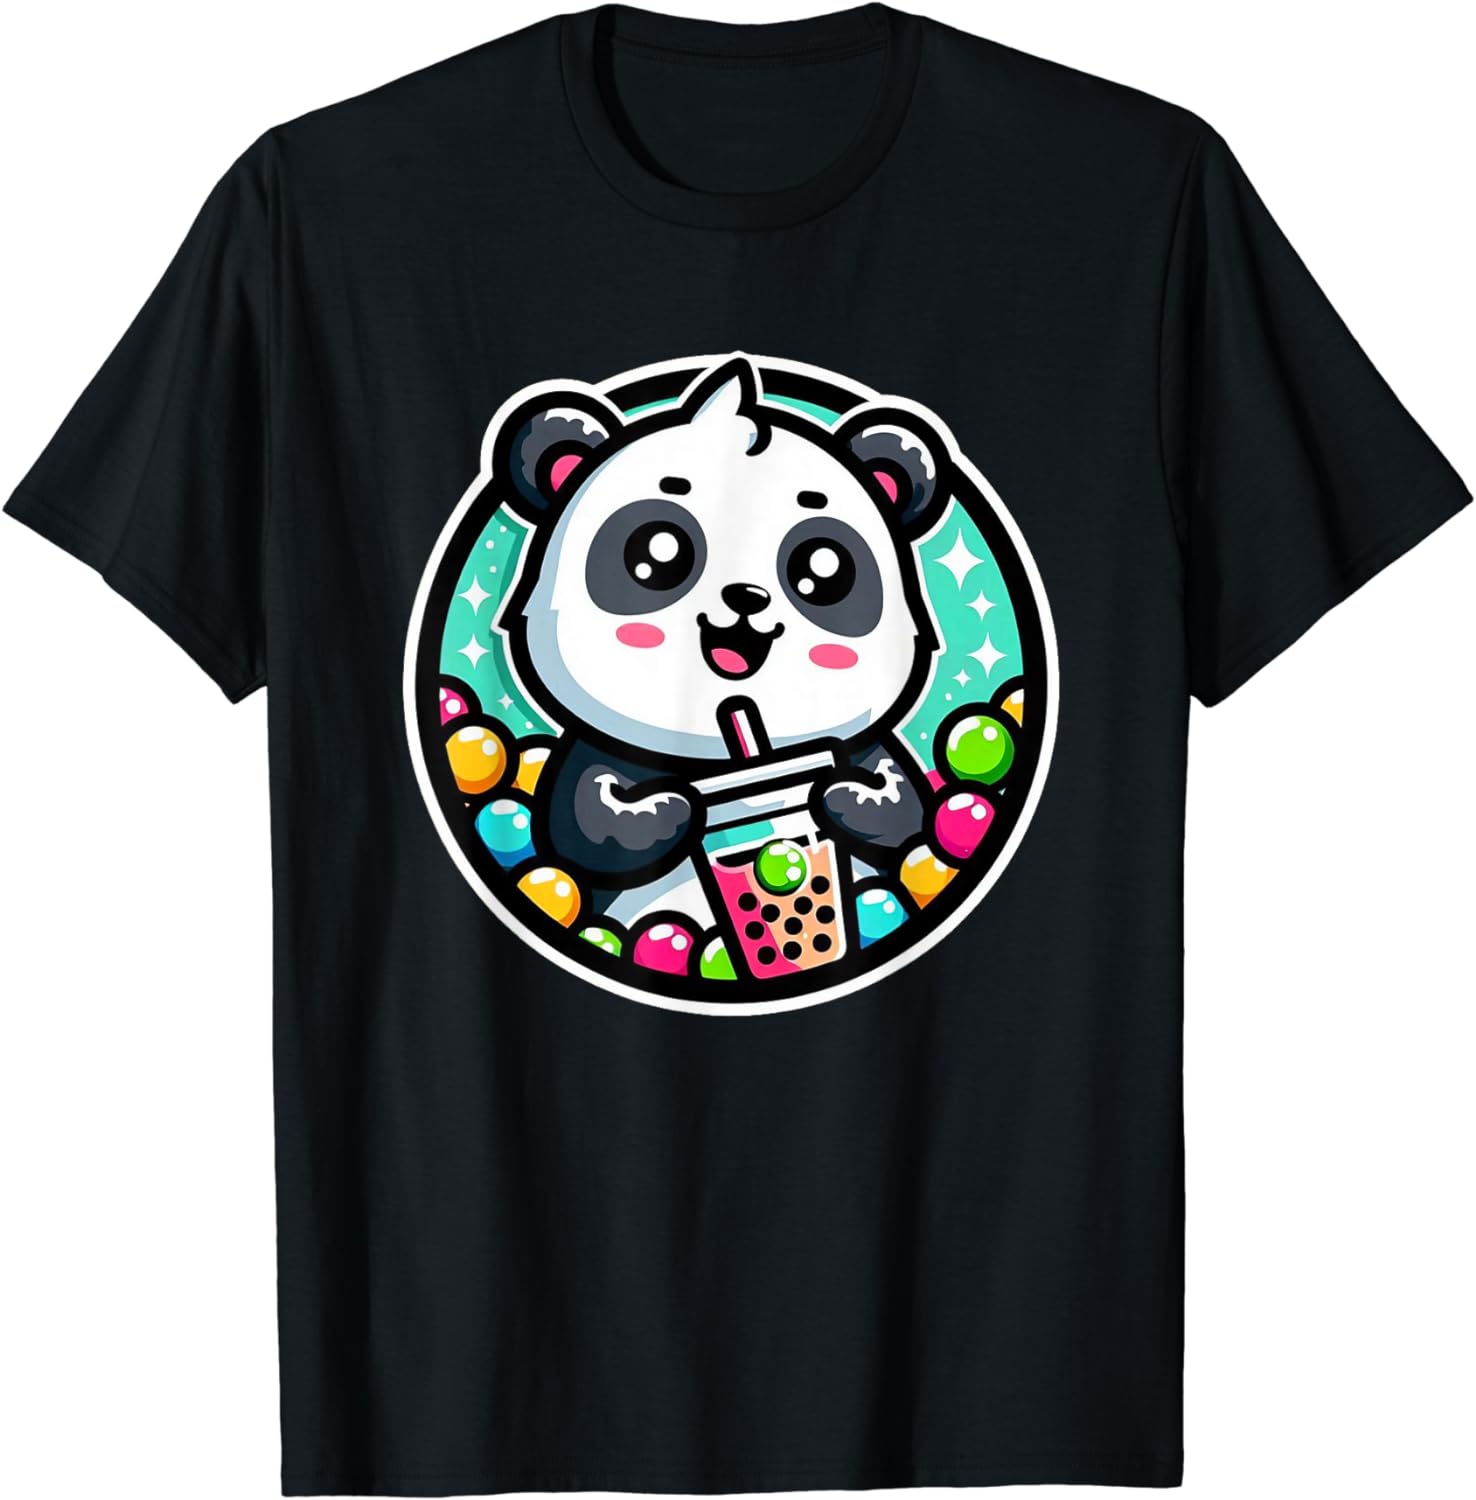 Panda drinks bubble tea shirt